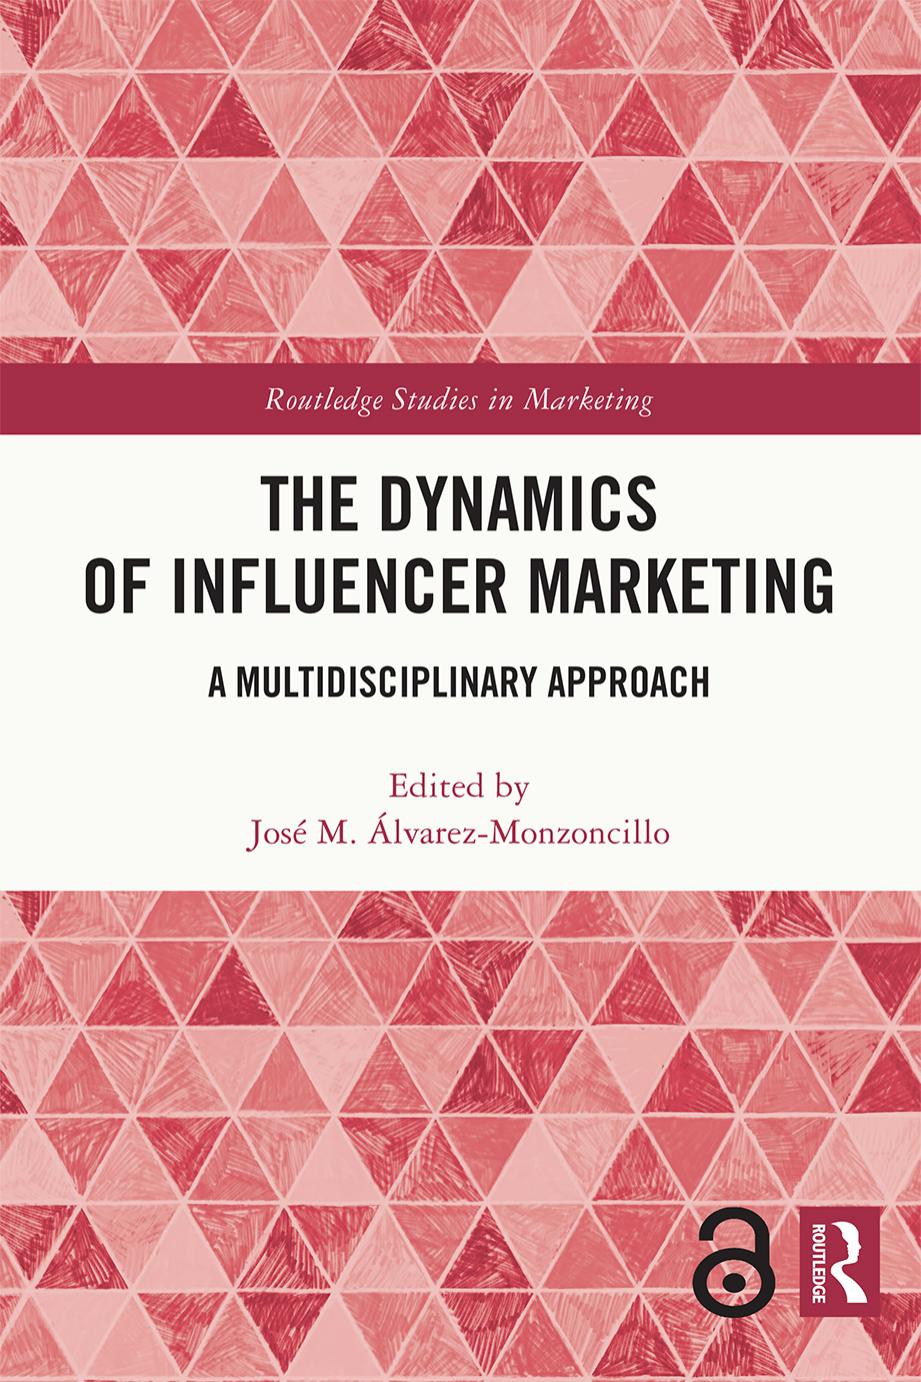 The Dynamics of Influencer Marketing: A Multidisciplinary Approach by José M. Álvarez-Monzoncillo